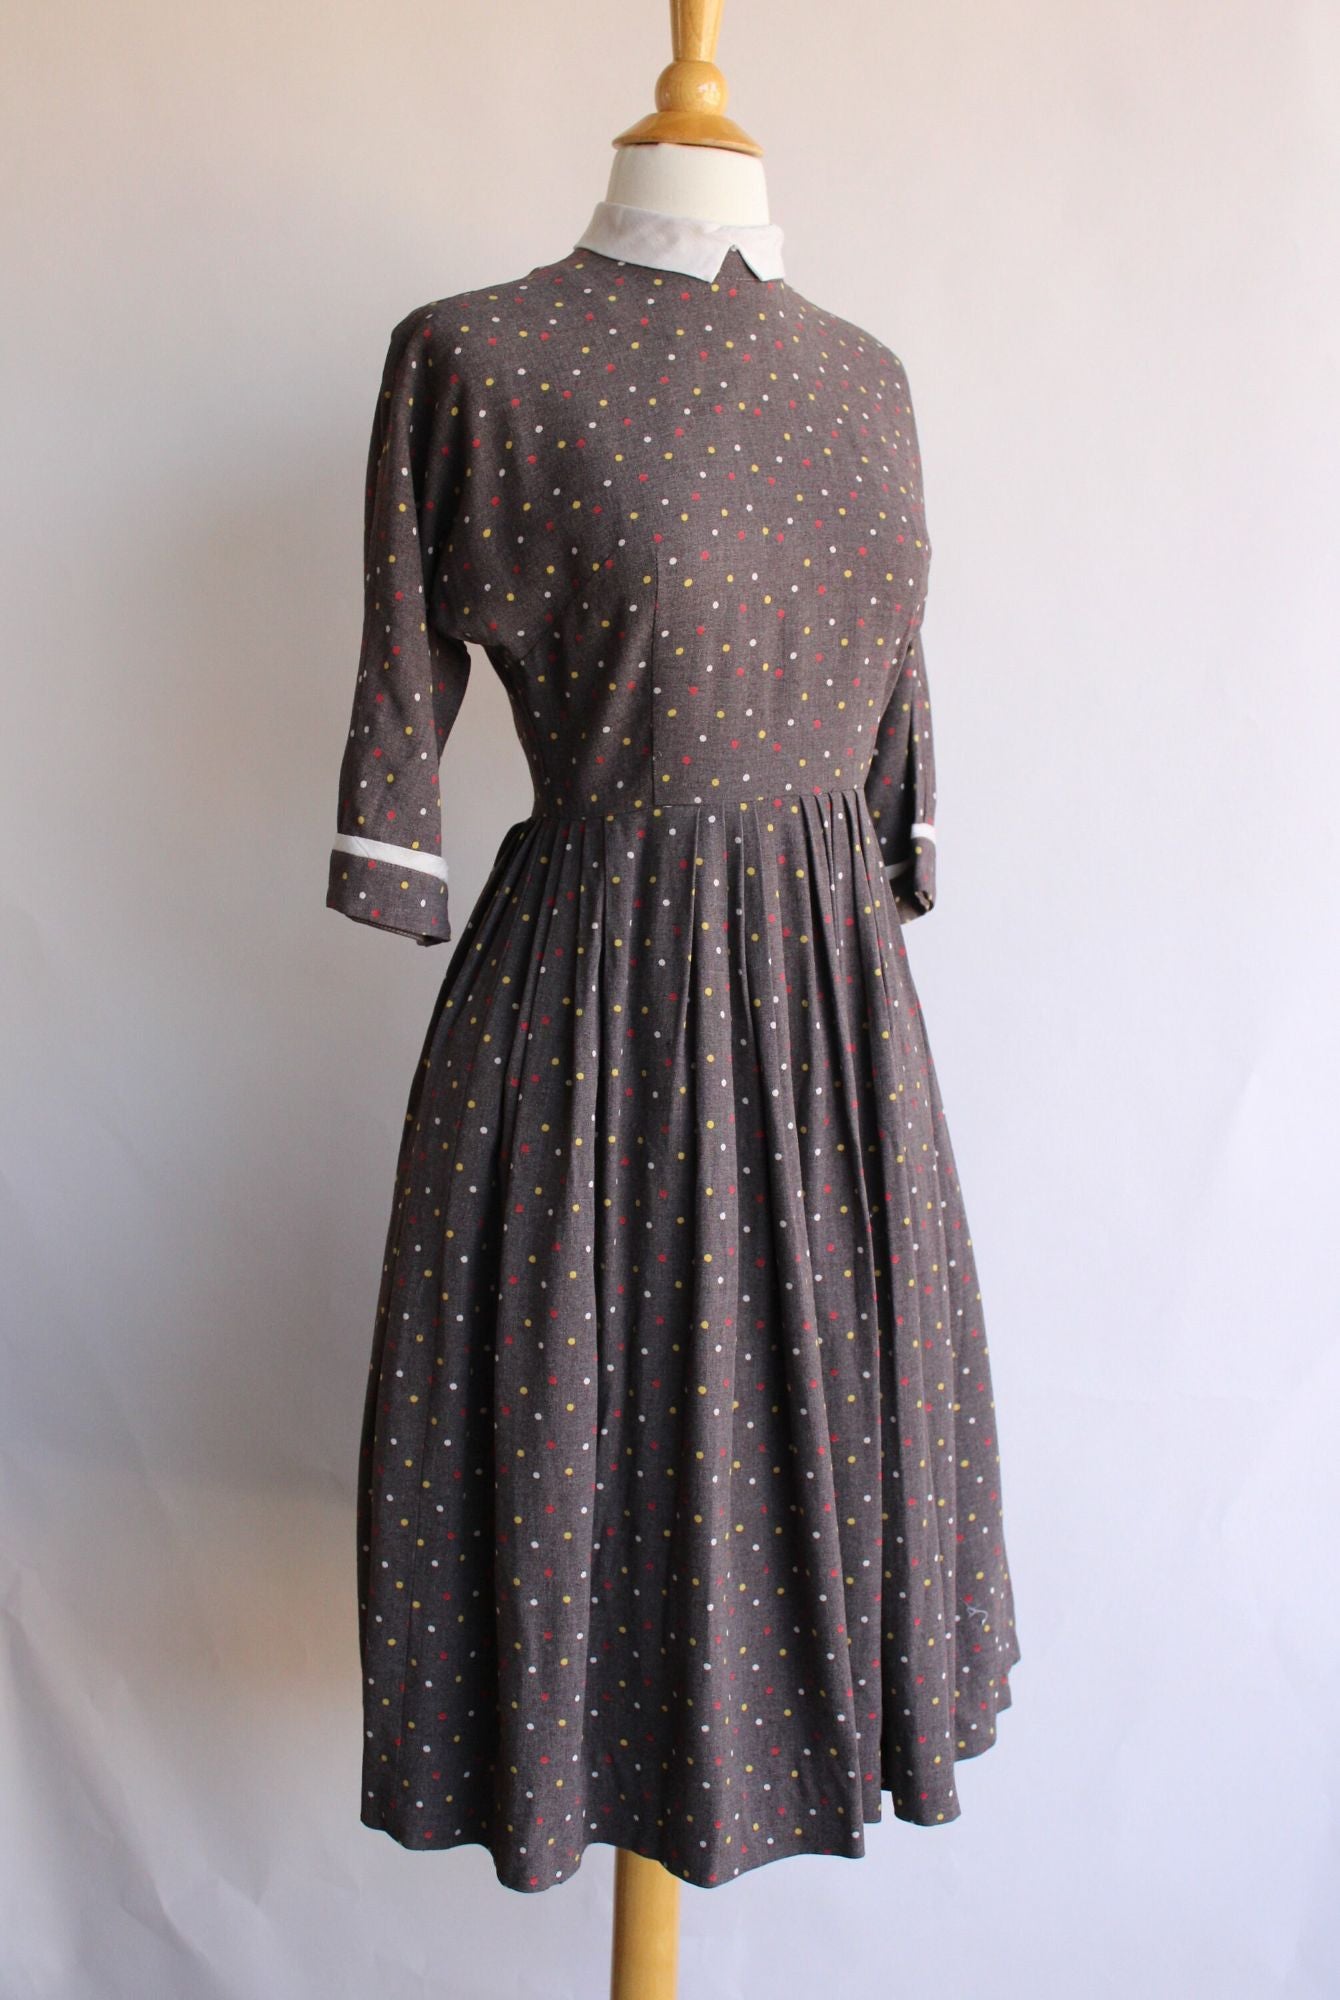 Vintage 1950s Brown with Multi Color Poldadots Dress